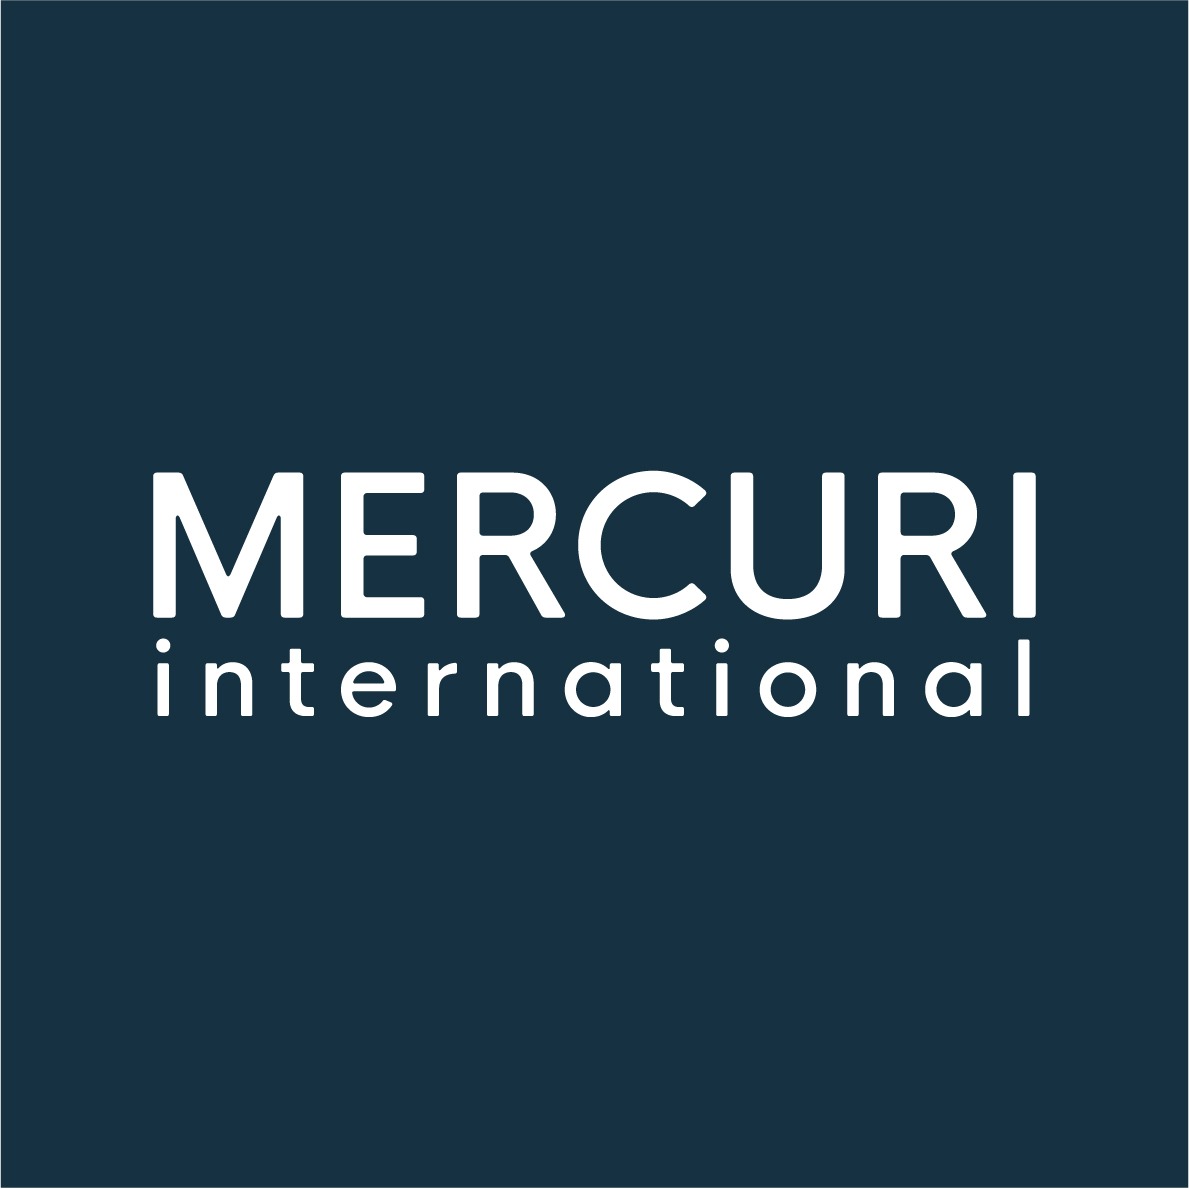 the Mercuri International logo.